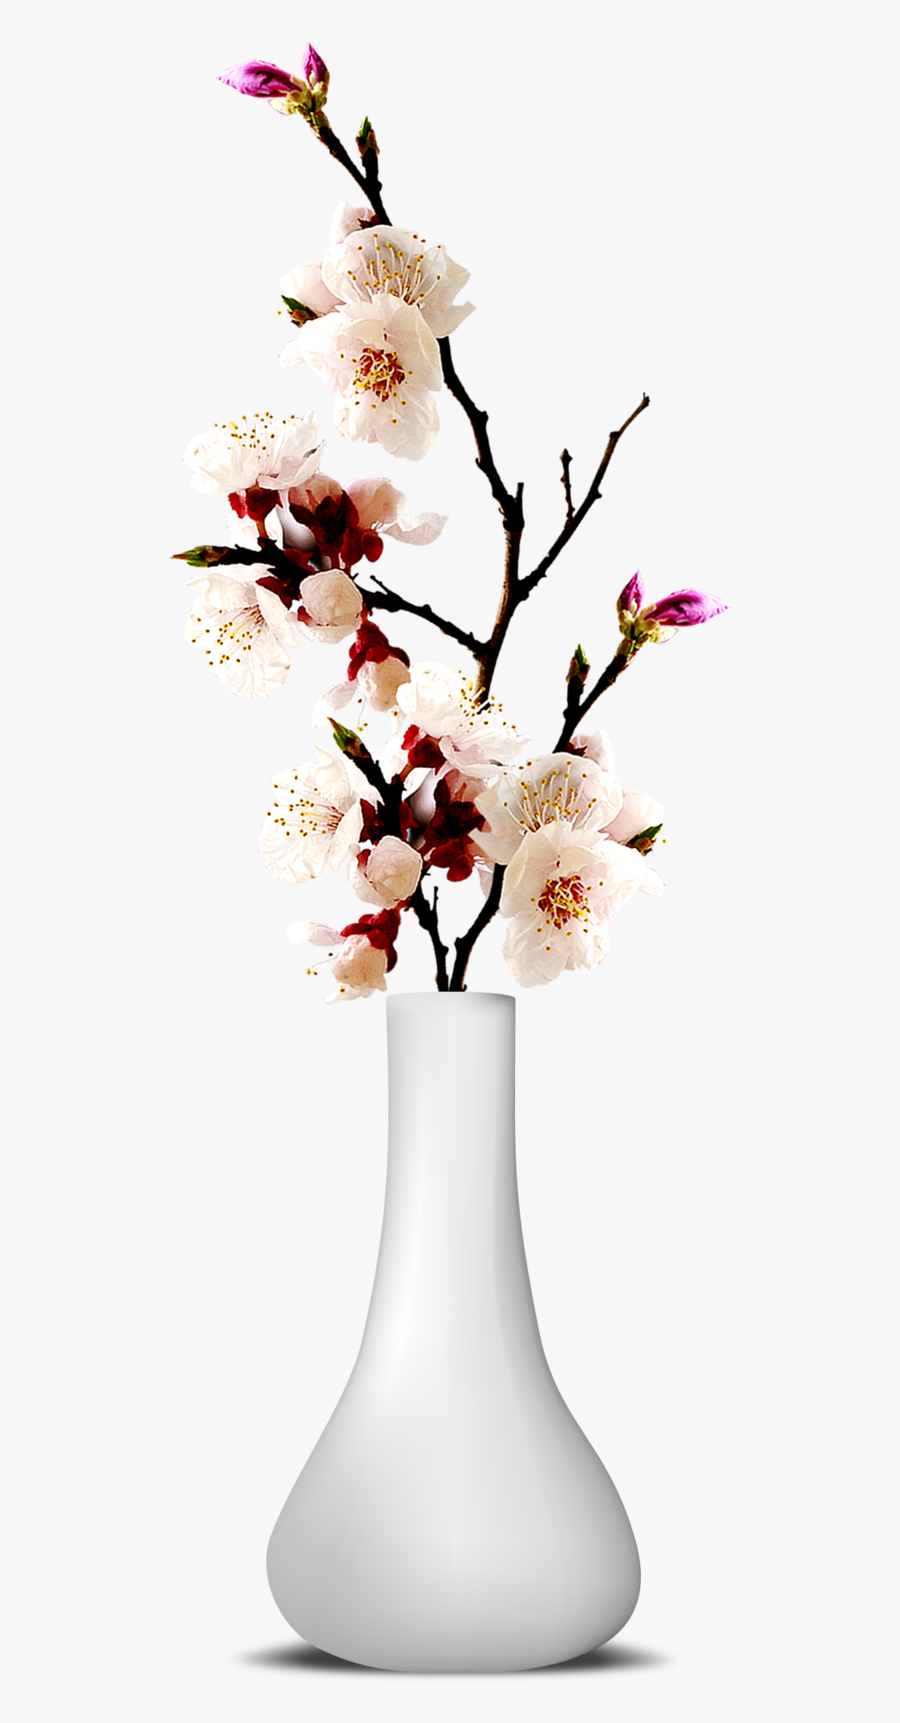 Transparent Flower Vase Png, Transparent Clipart